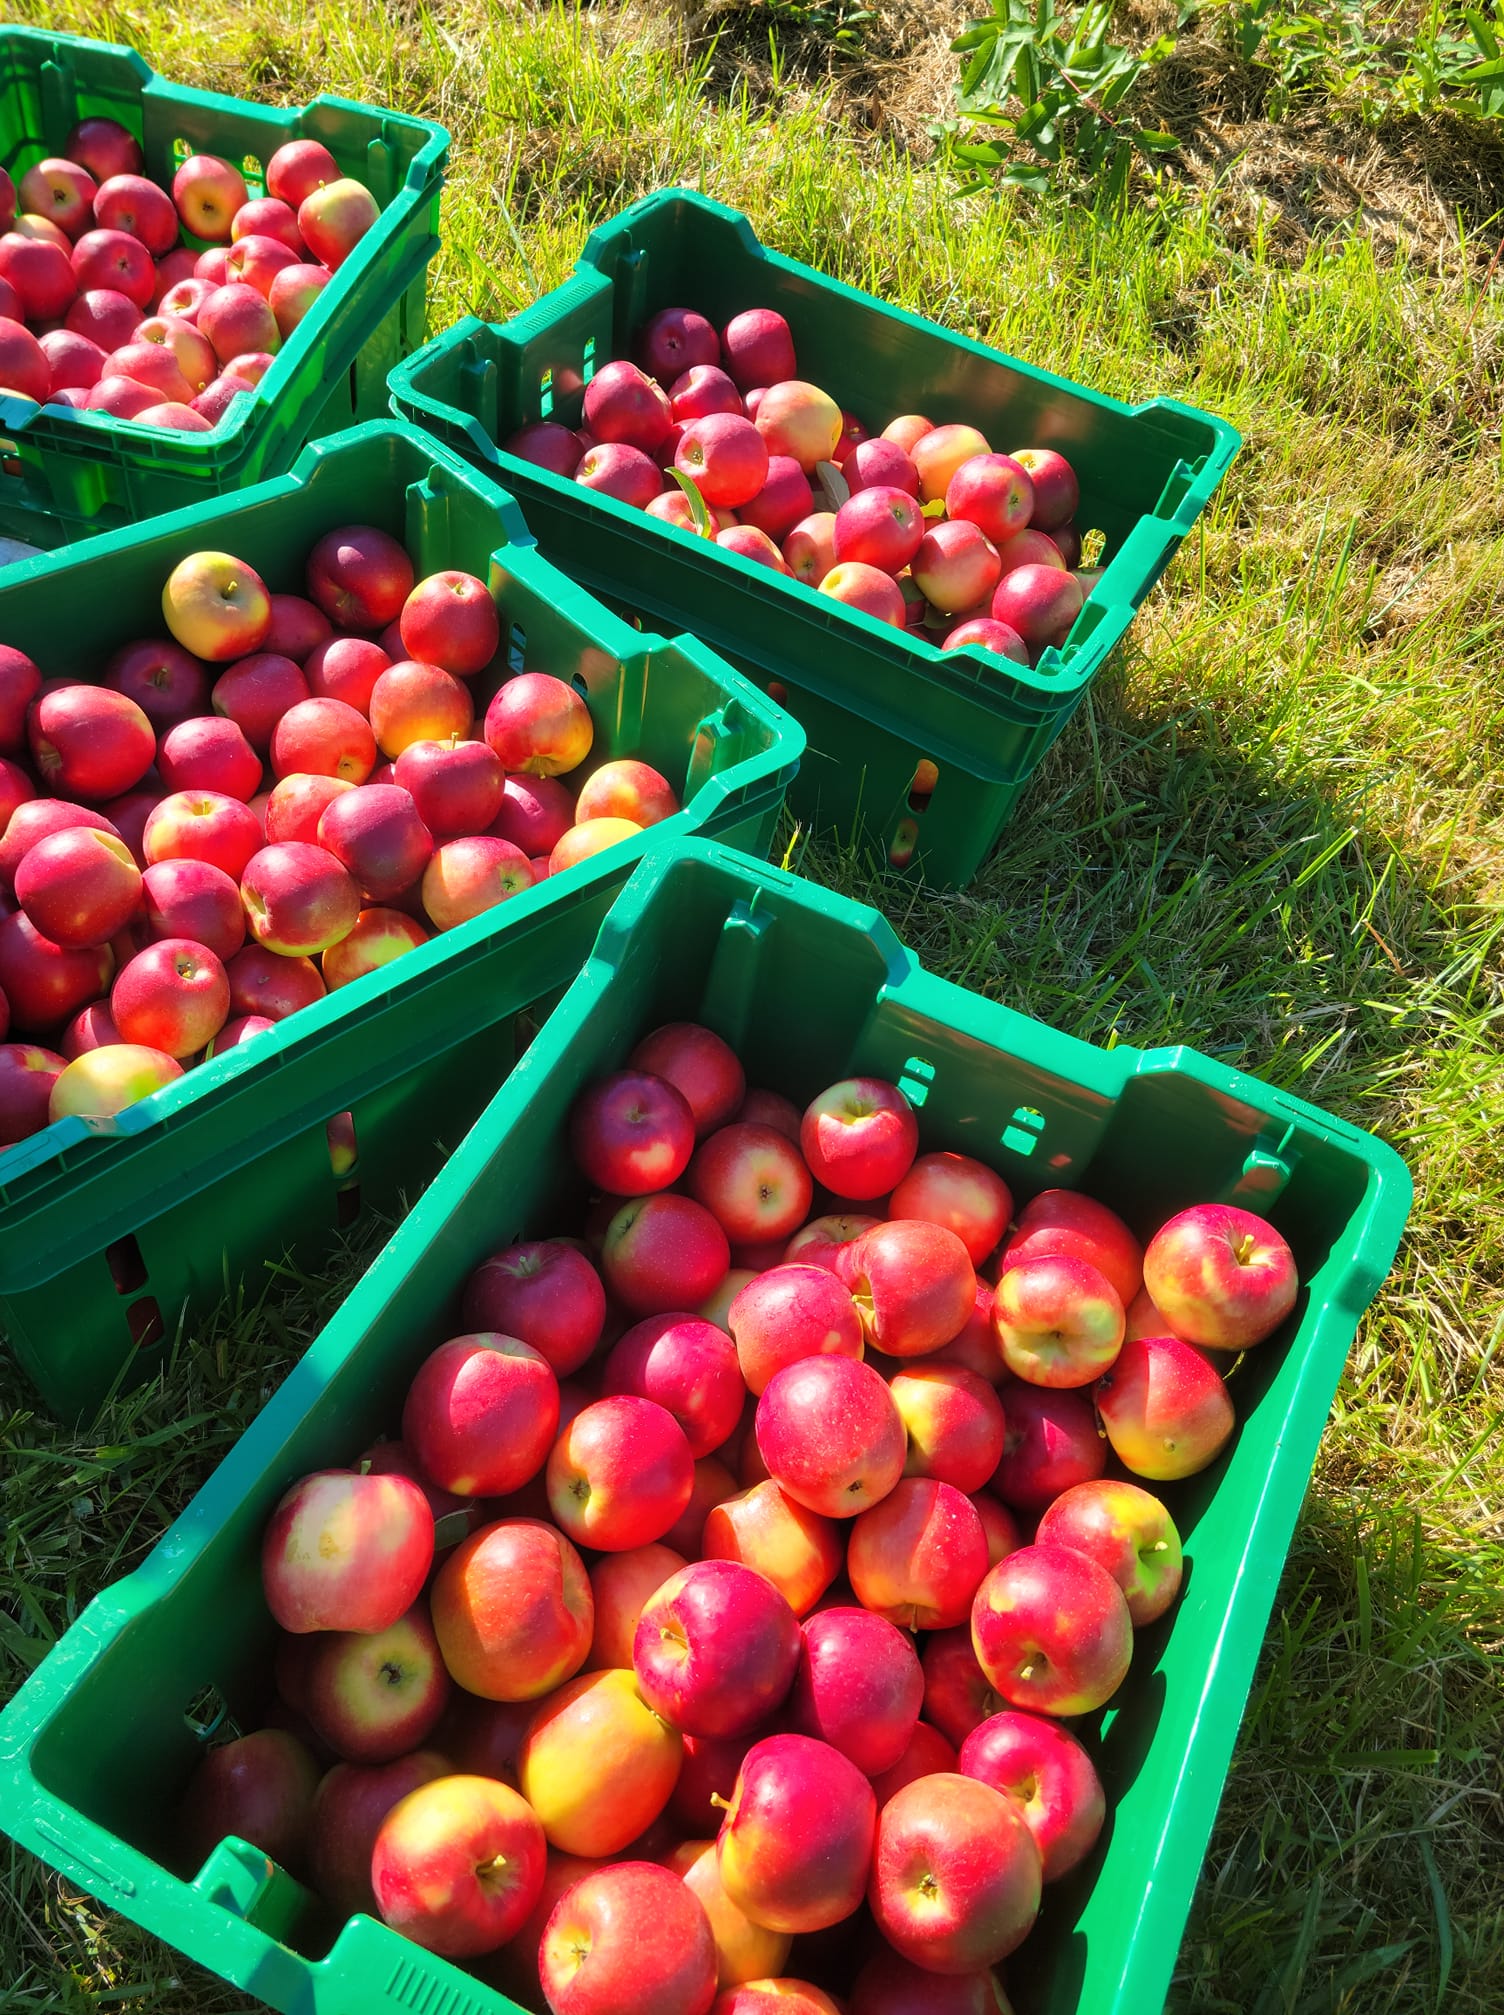 apples in bins